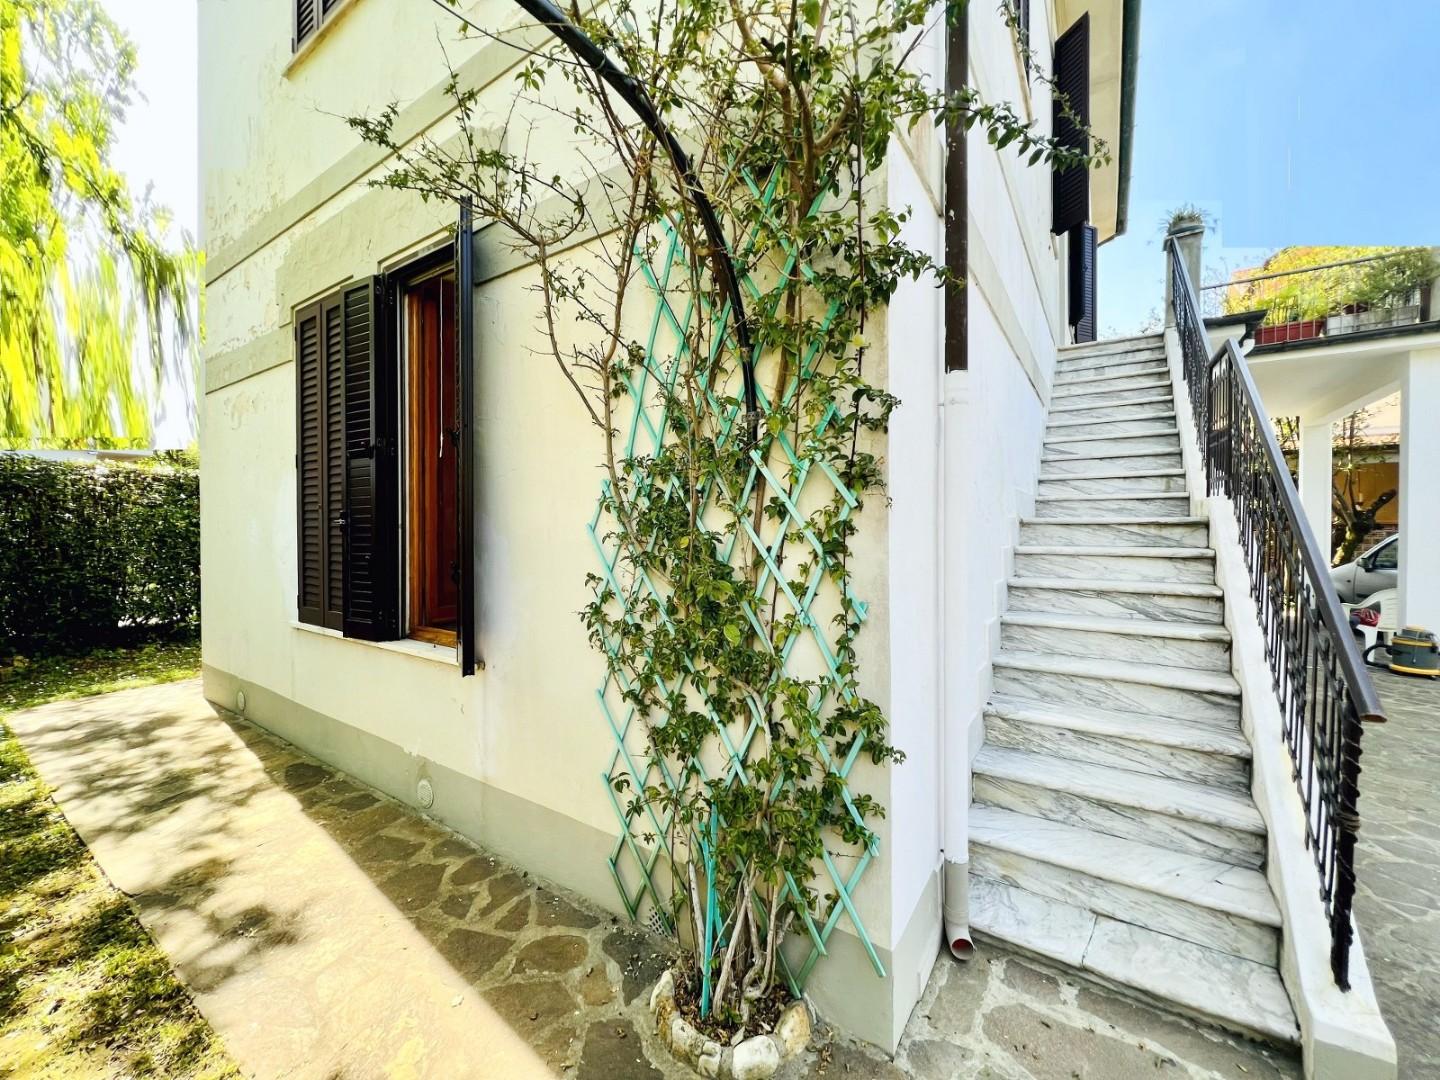 Villa singola in vendita a Pietrasanta (LU)